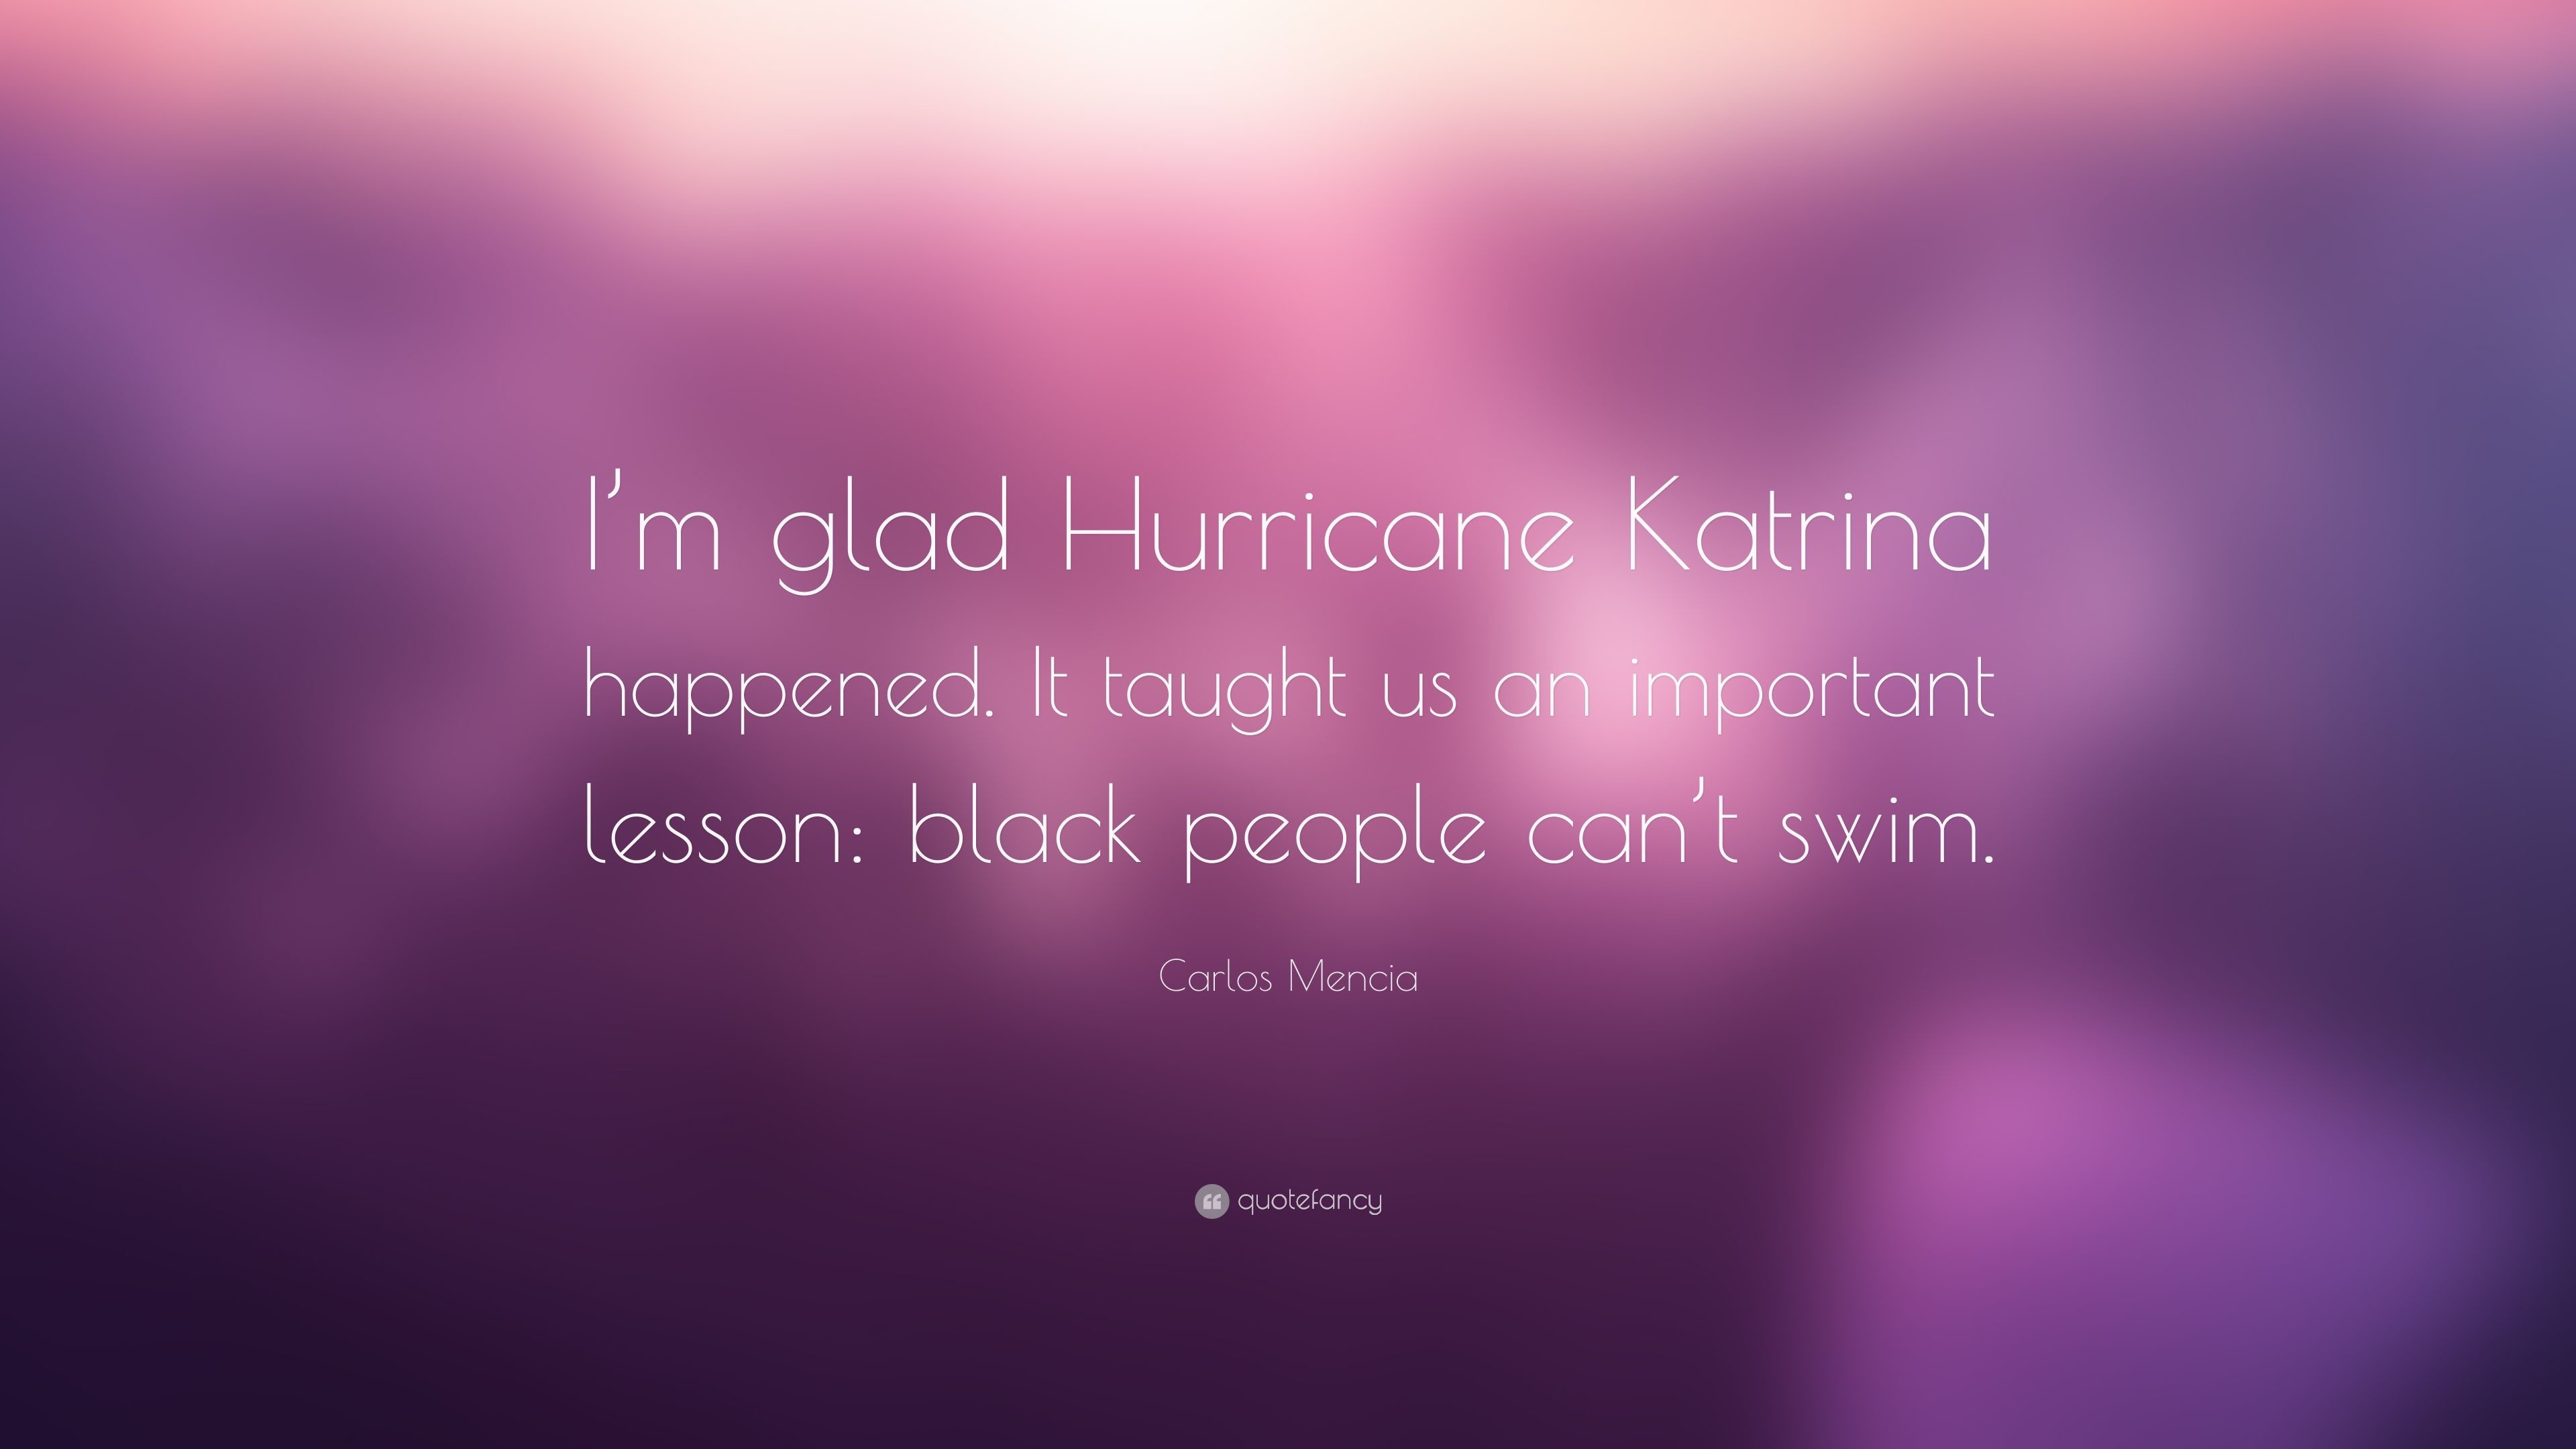 3840x2160 Carlos Mencia Quote: “I'm glad Hurricane Katrina happened. It taught us